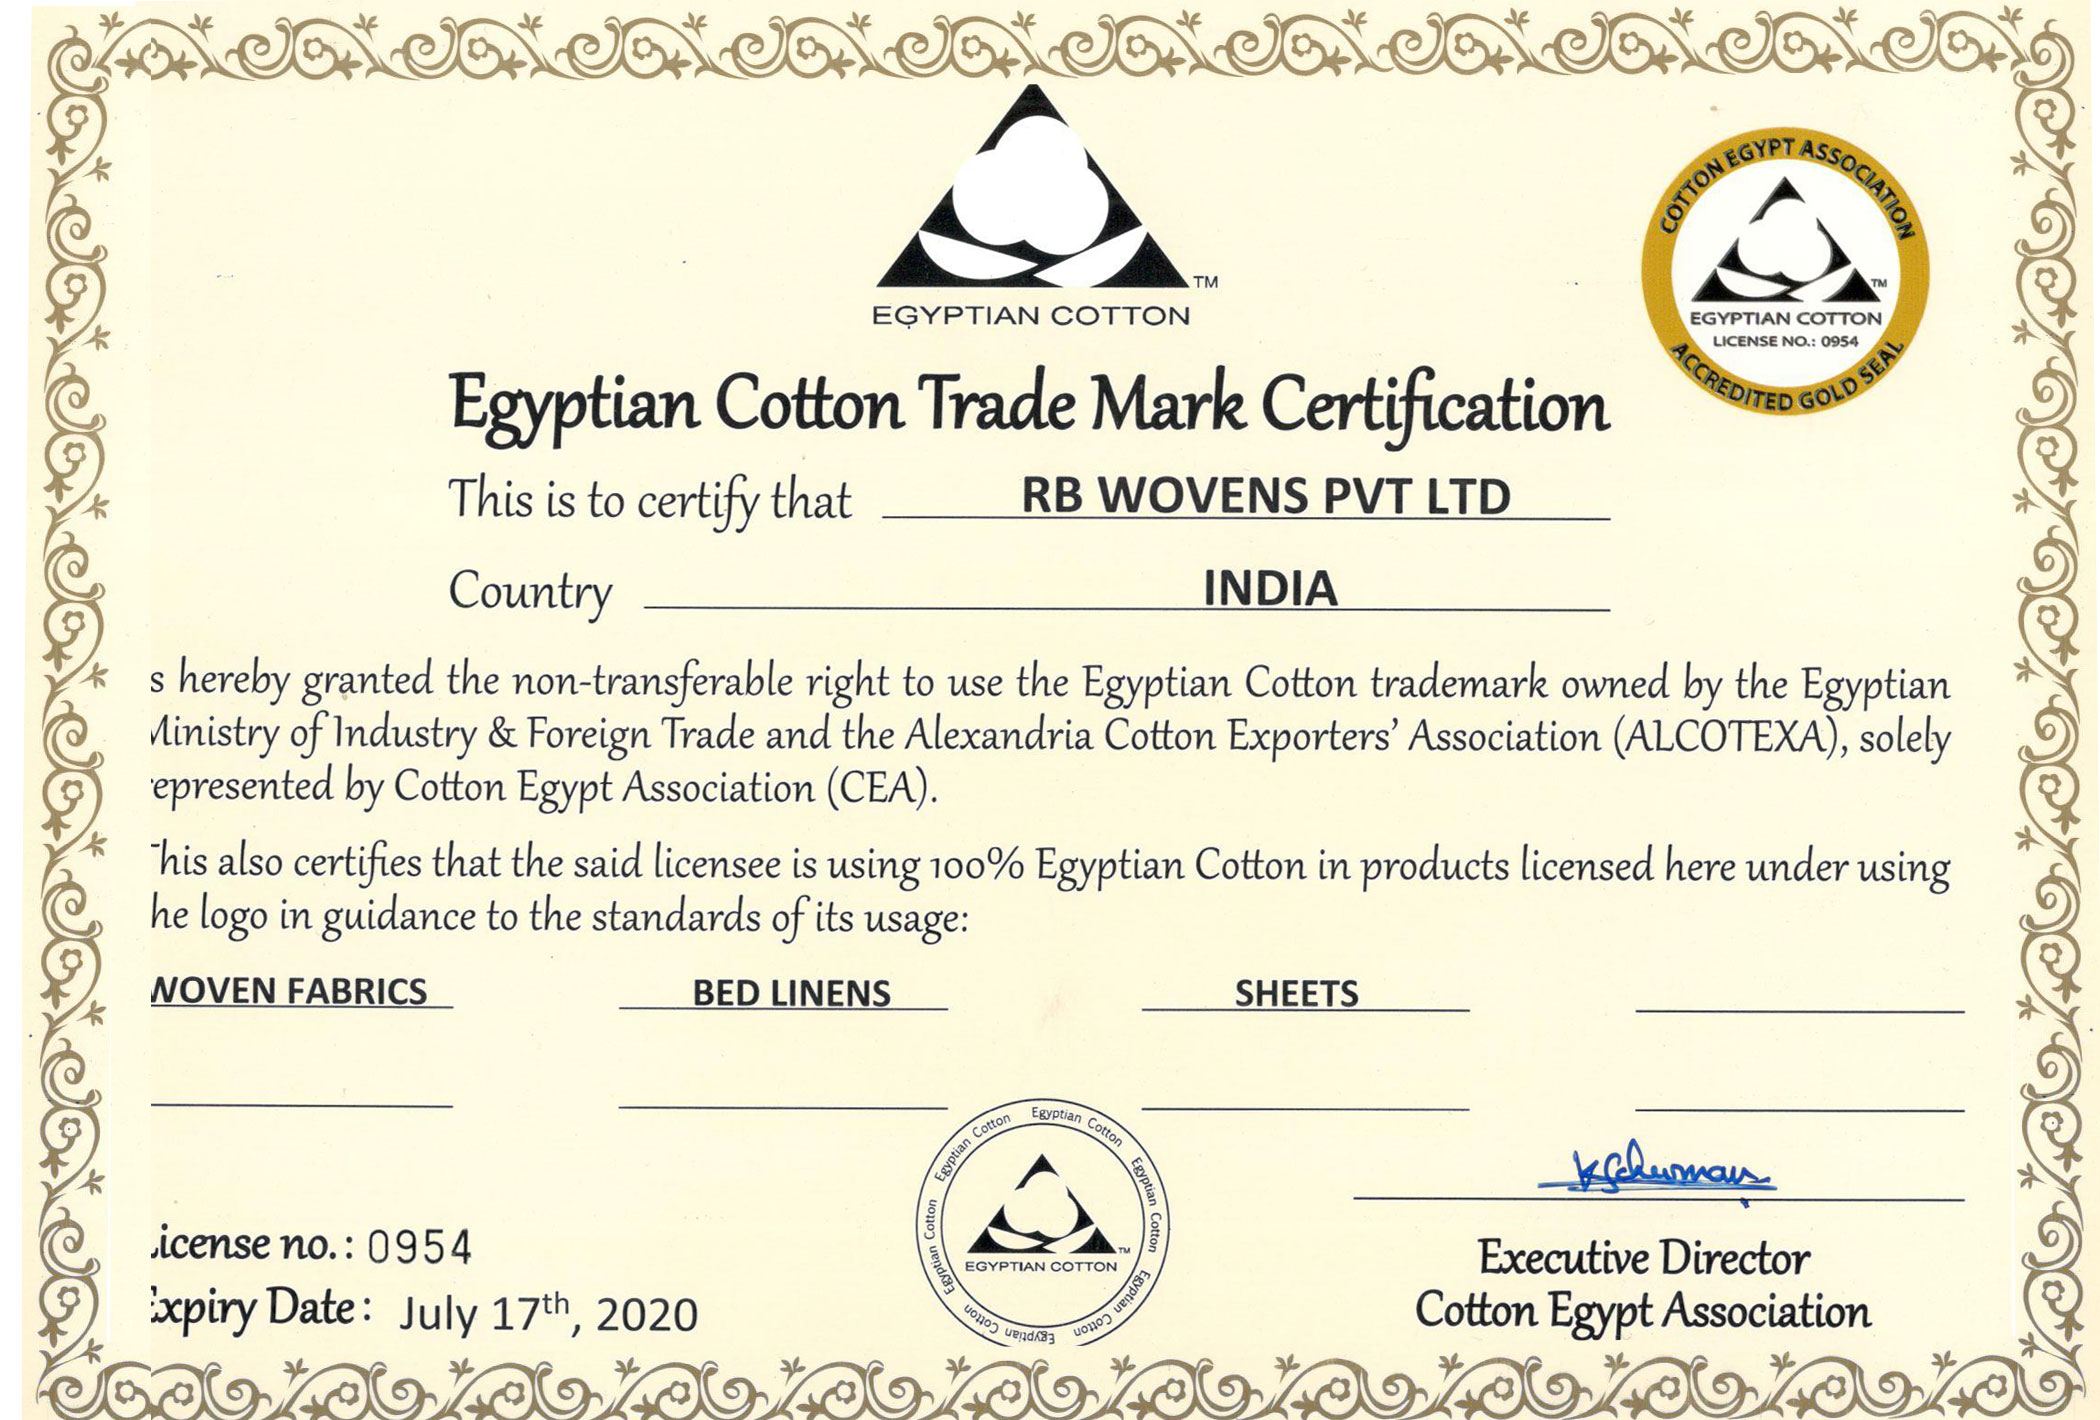 Cotton Egyption Association - Under Process